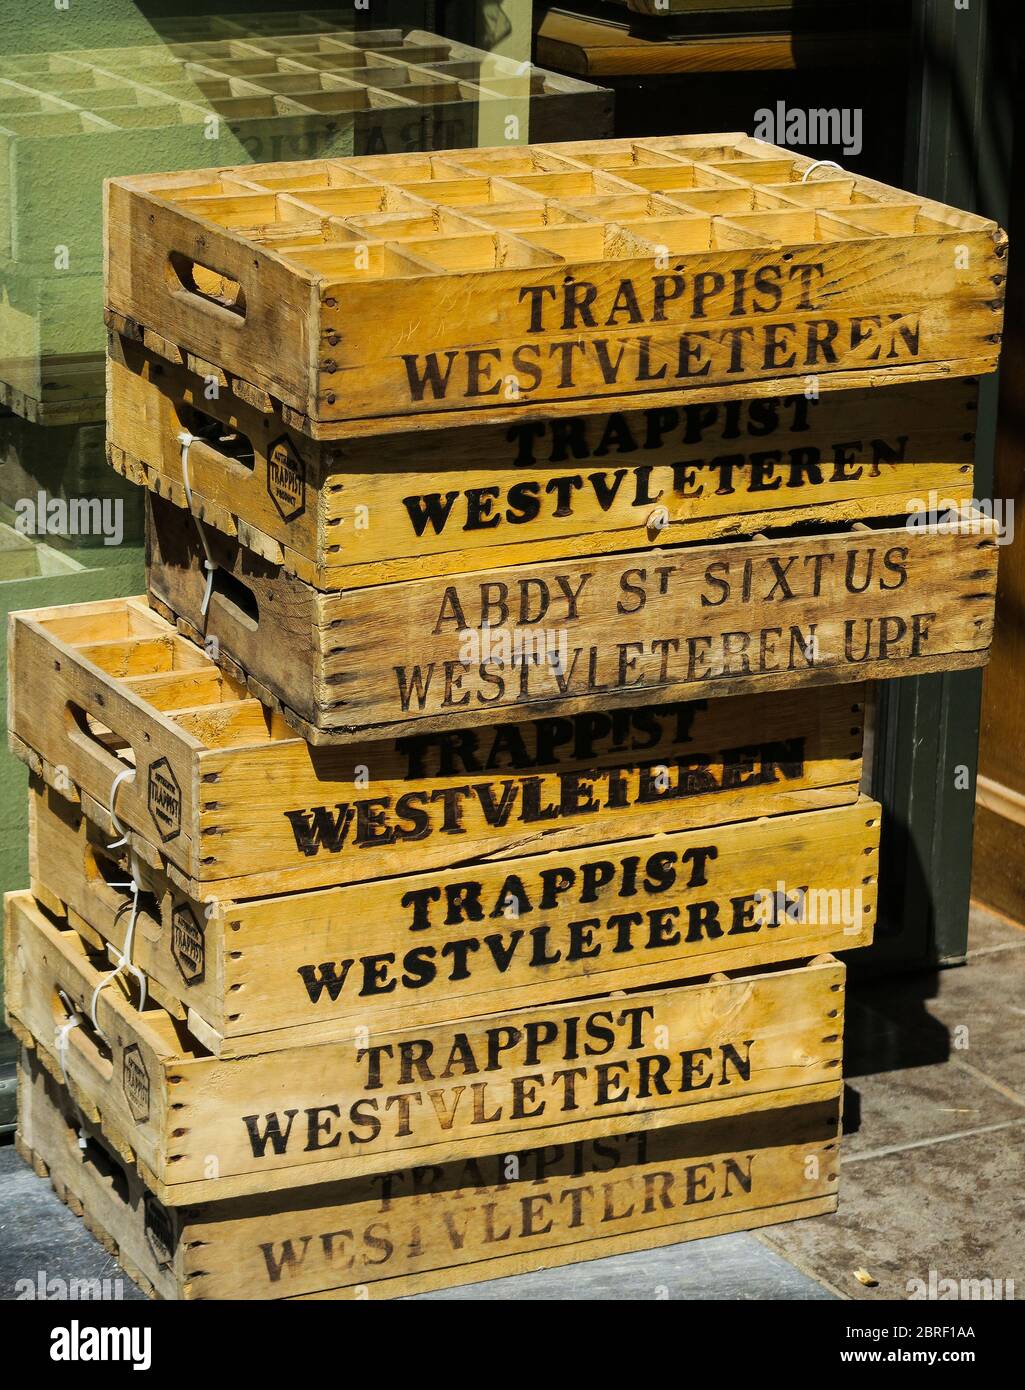 Trappist Westvleteren beer crates in Brussels. Stock Photo